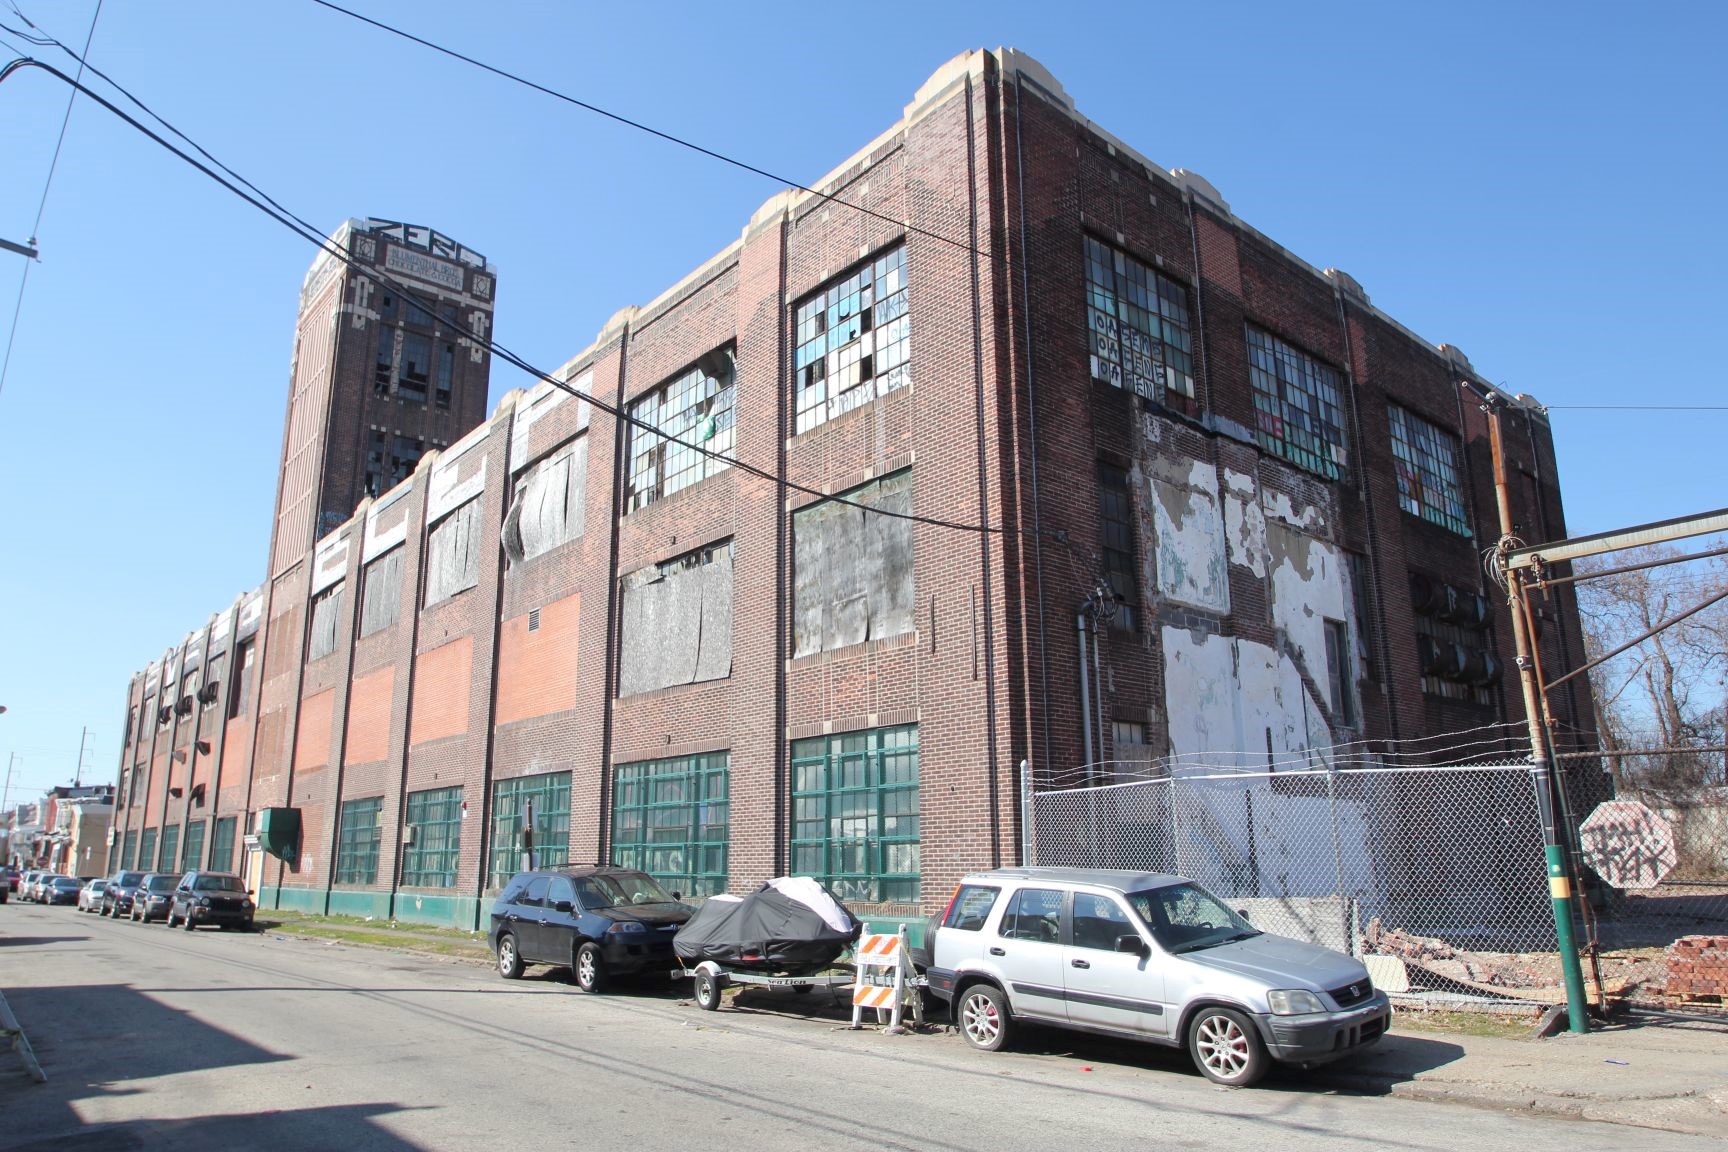 Three-story brick factory building.